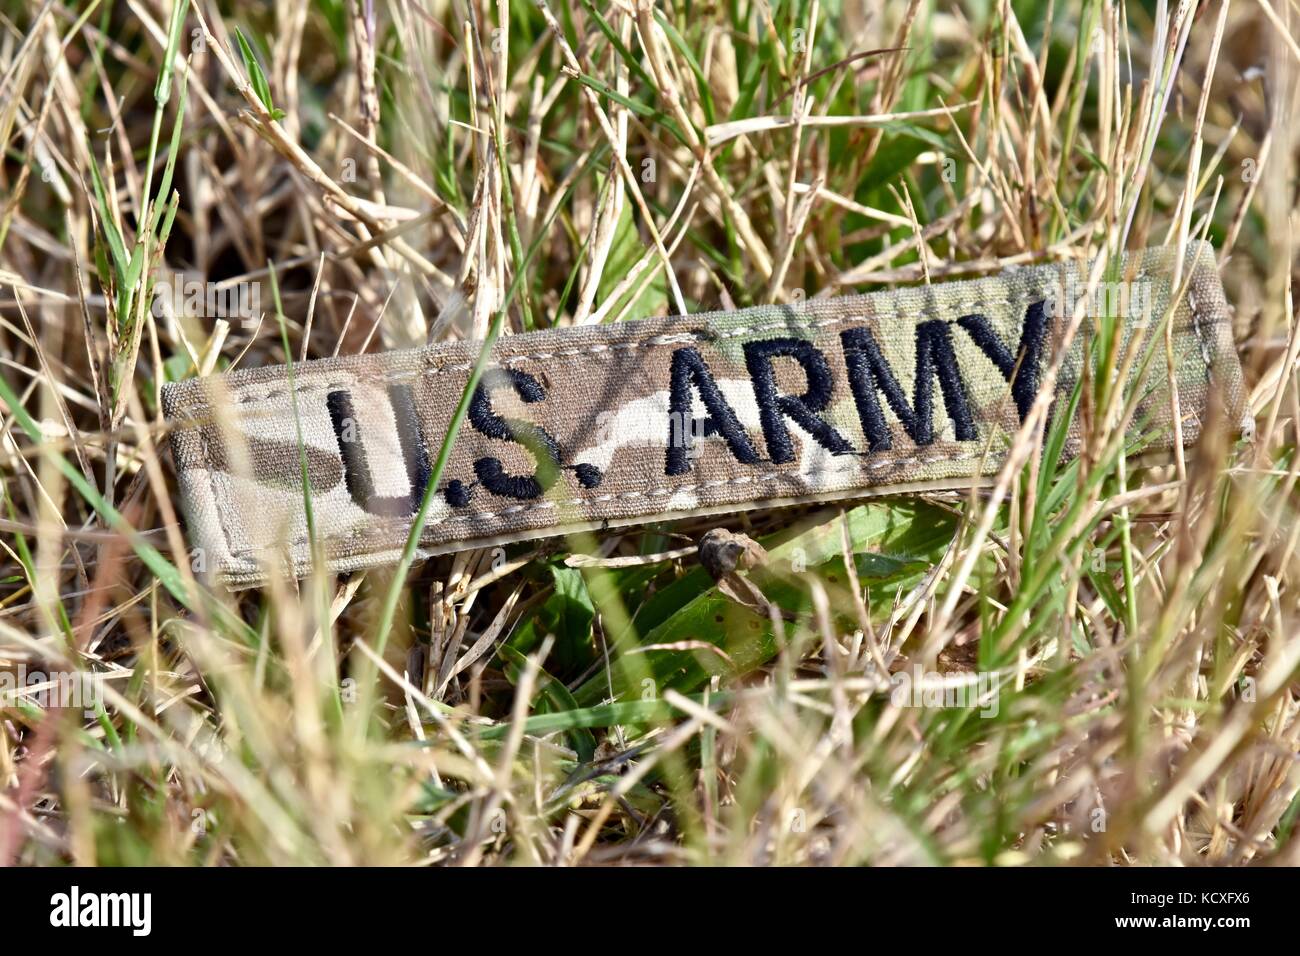 U.S. Army uniform piece on the ground Stock Photo